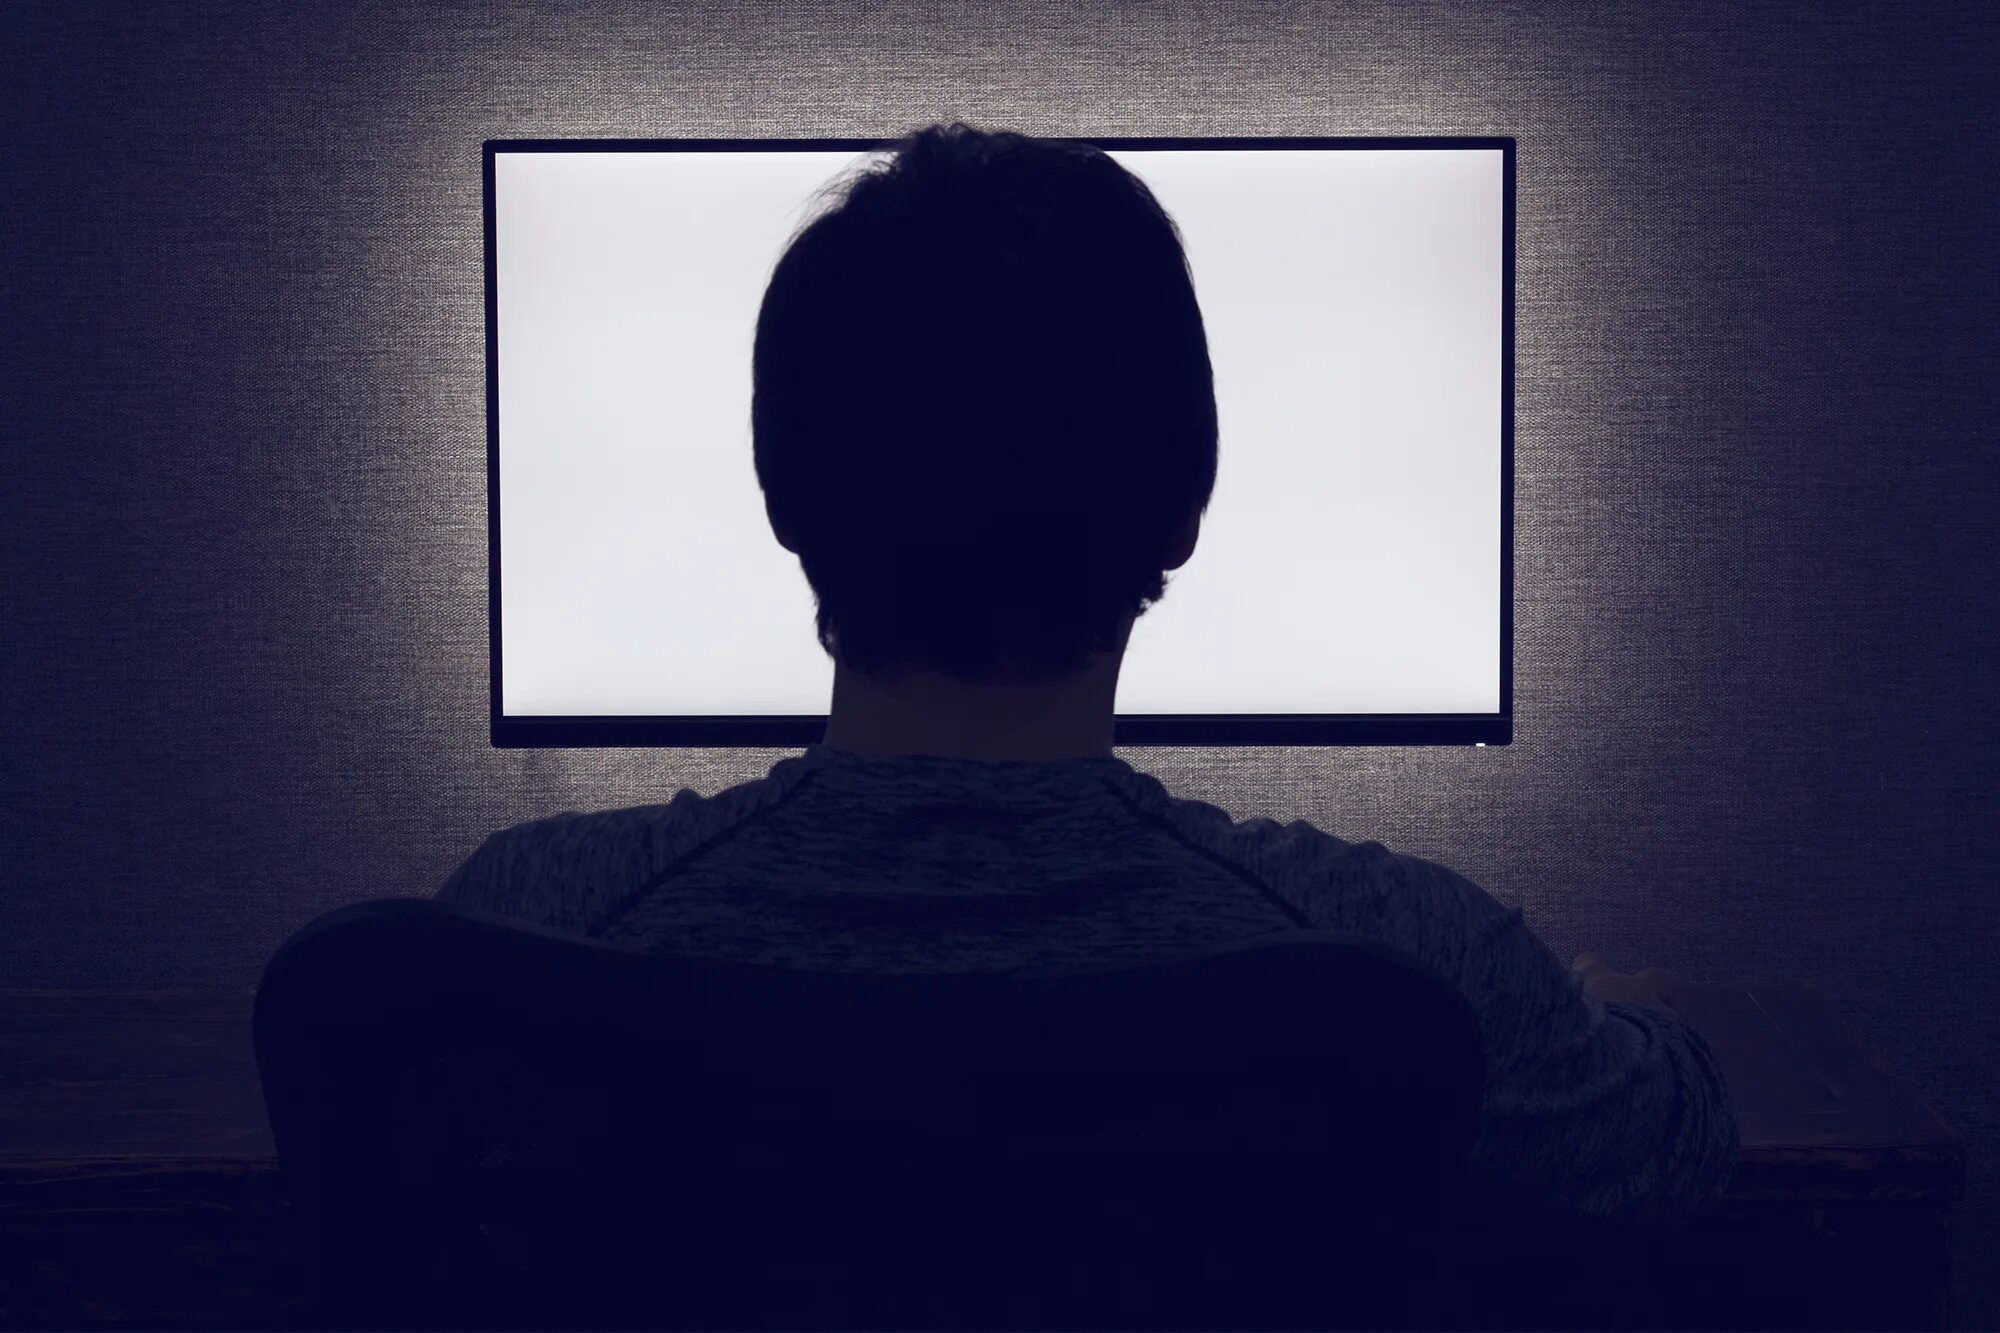 Person tv. Человек перед монитором. Человек перед экраном. Человек перед телевизором в темноте. Телевизор в темноте.